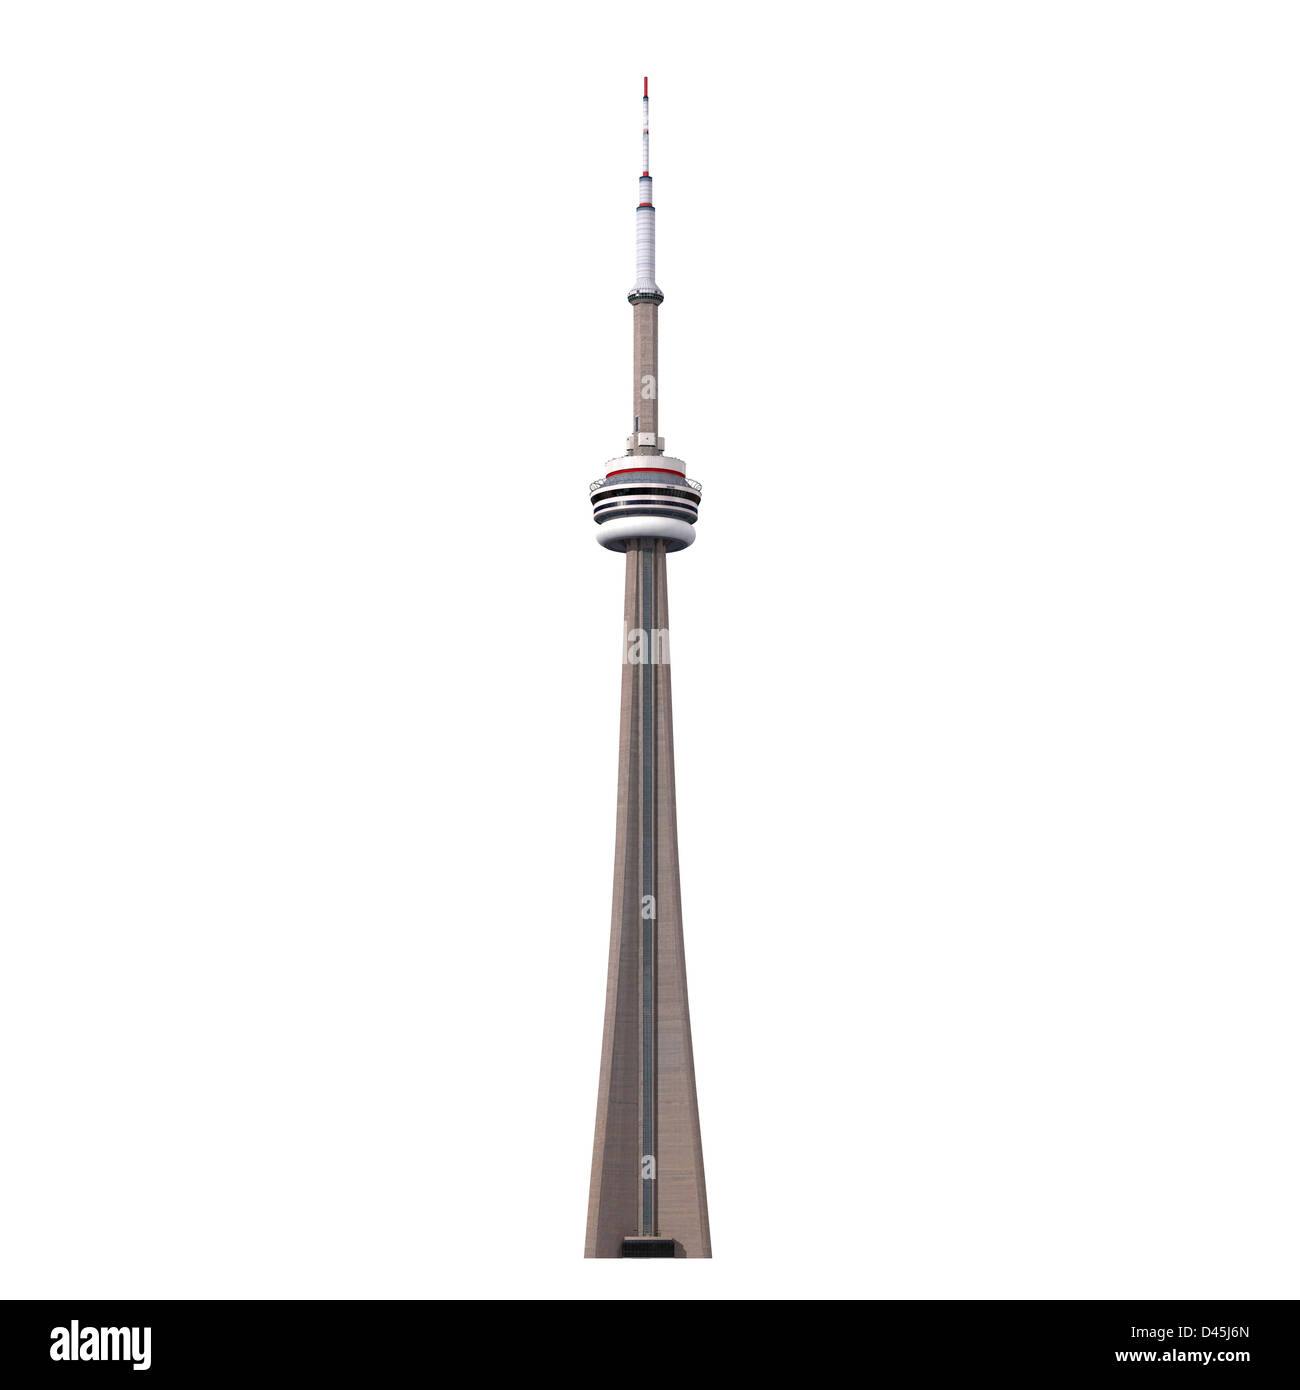 Toronto CN Tower cutout on white background. Photorealistic 3D illustration. Stock Photo